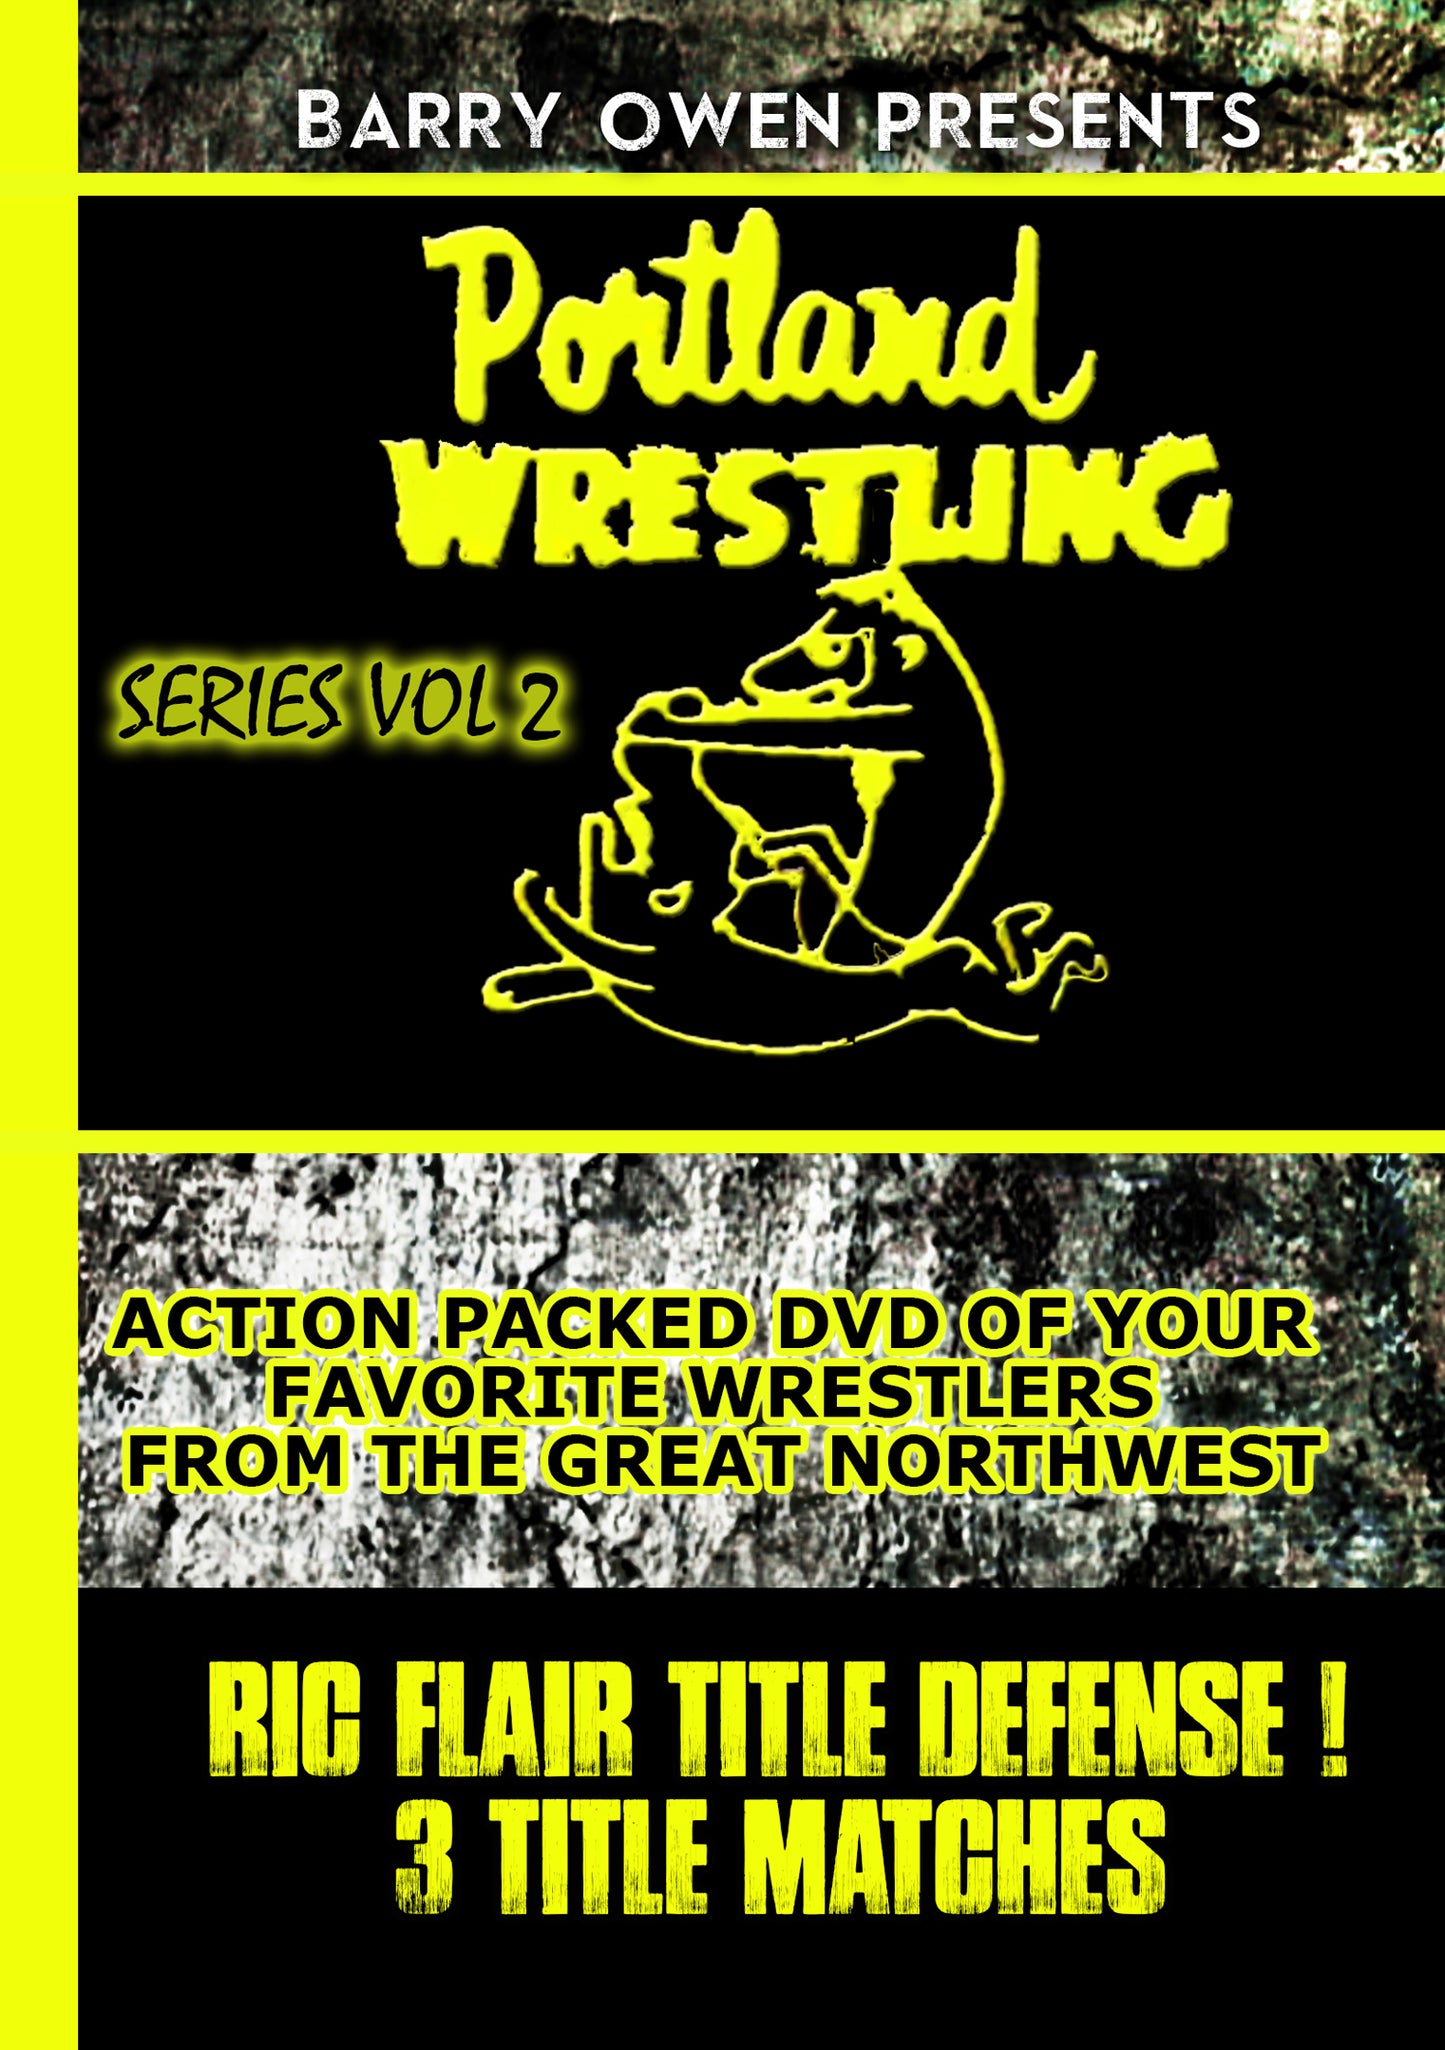 Barry Owen Presents: Best of Portland Wrestling - Vol. 2 cover art